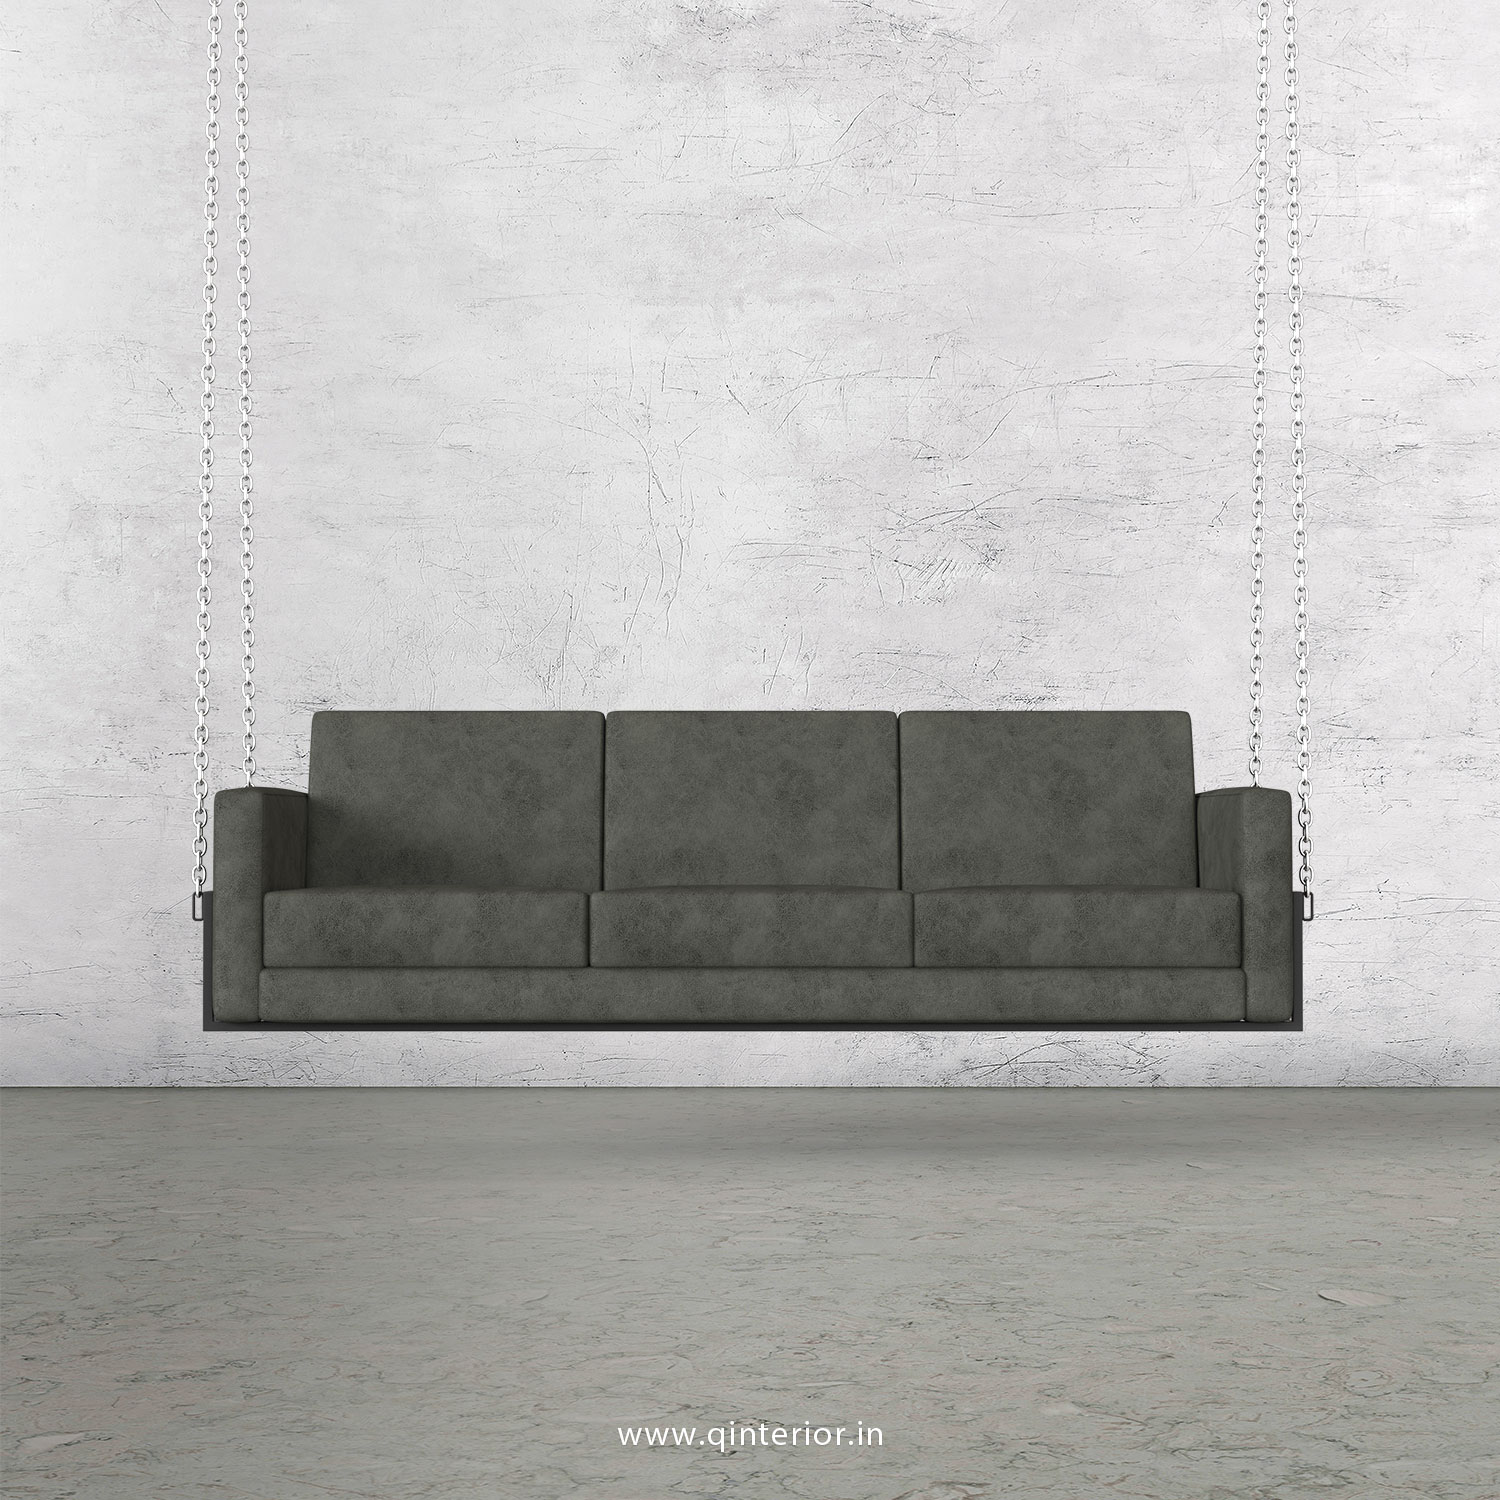 NIRVANA 3 Seater Swing Sofa in Fab Leather Fabric - SSF001 FL07